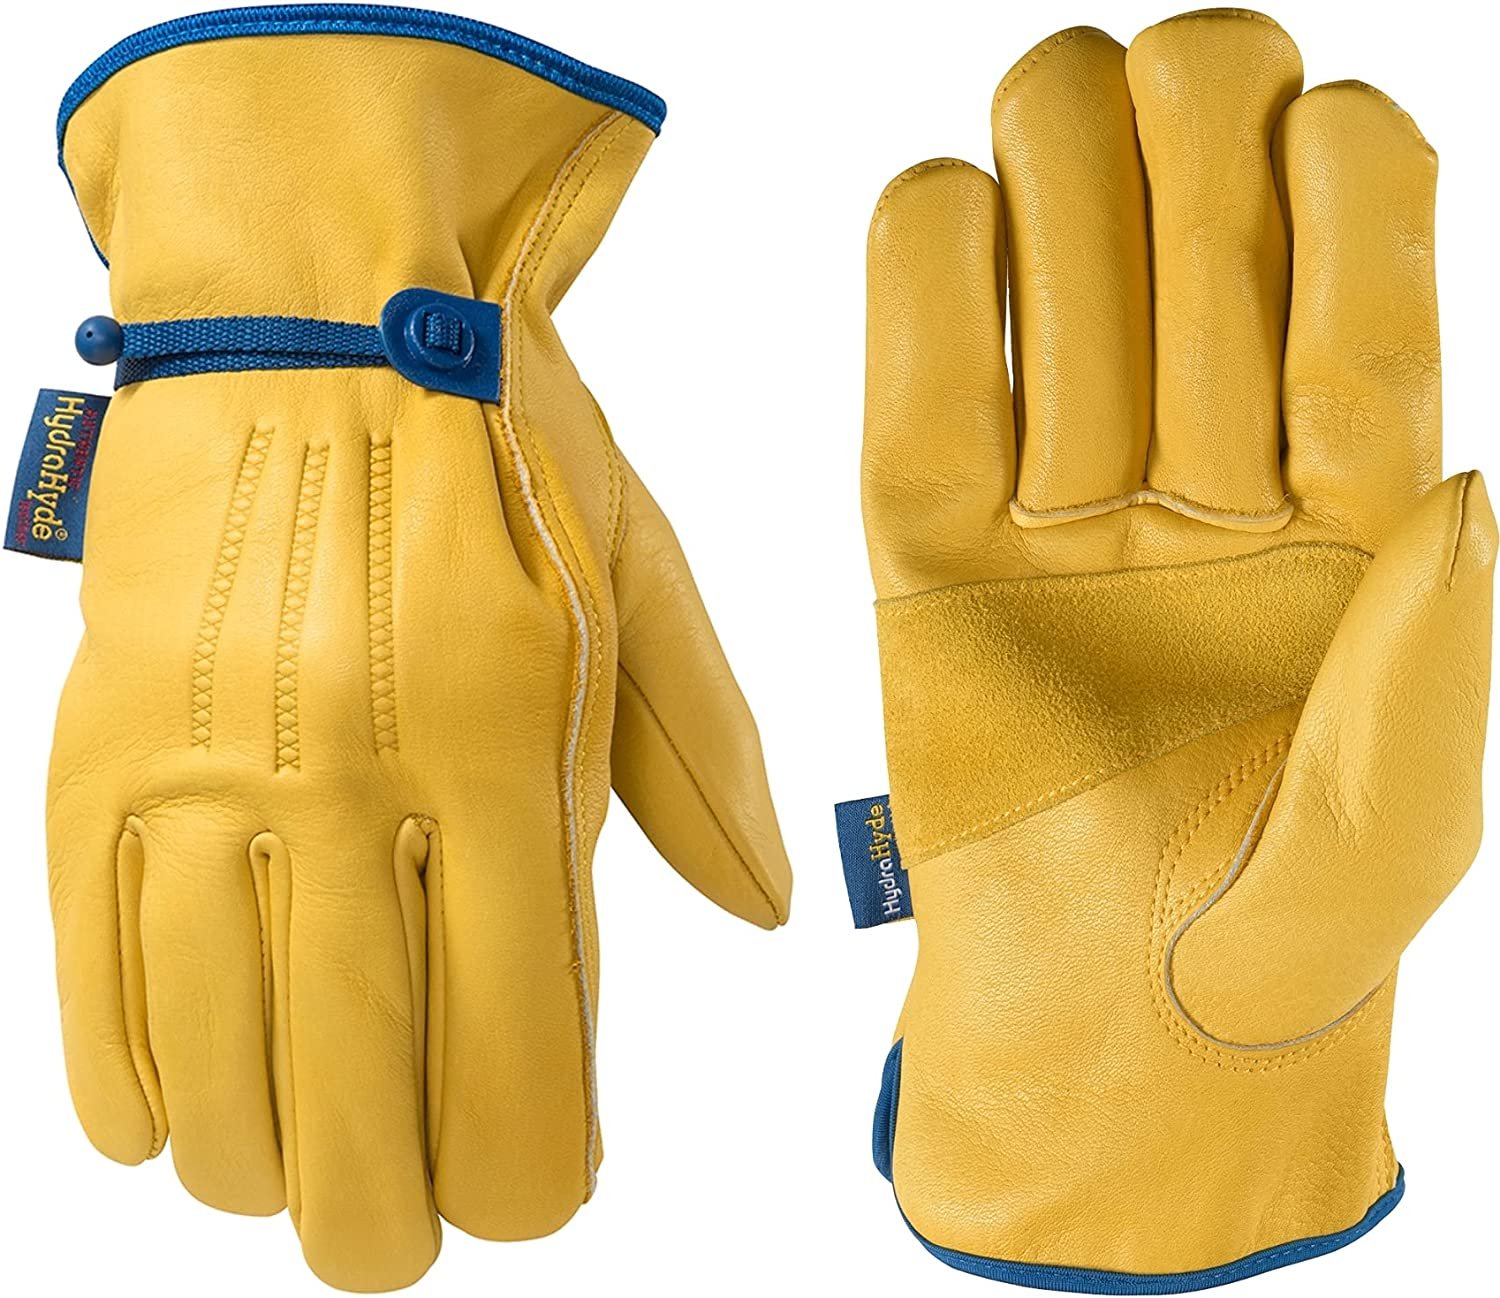 Wells Lamont HydraHyde work gloves